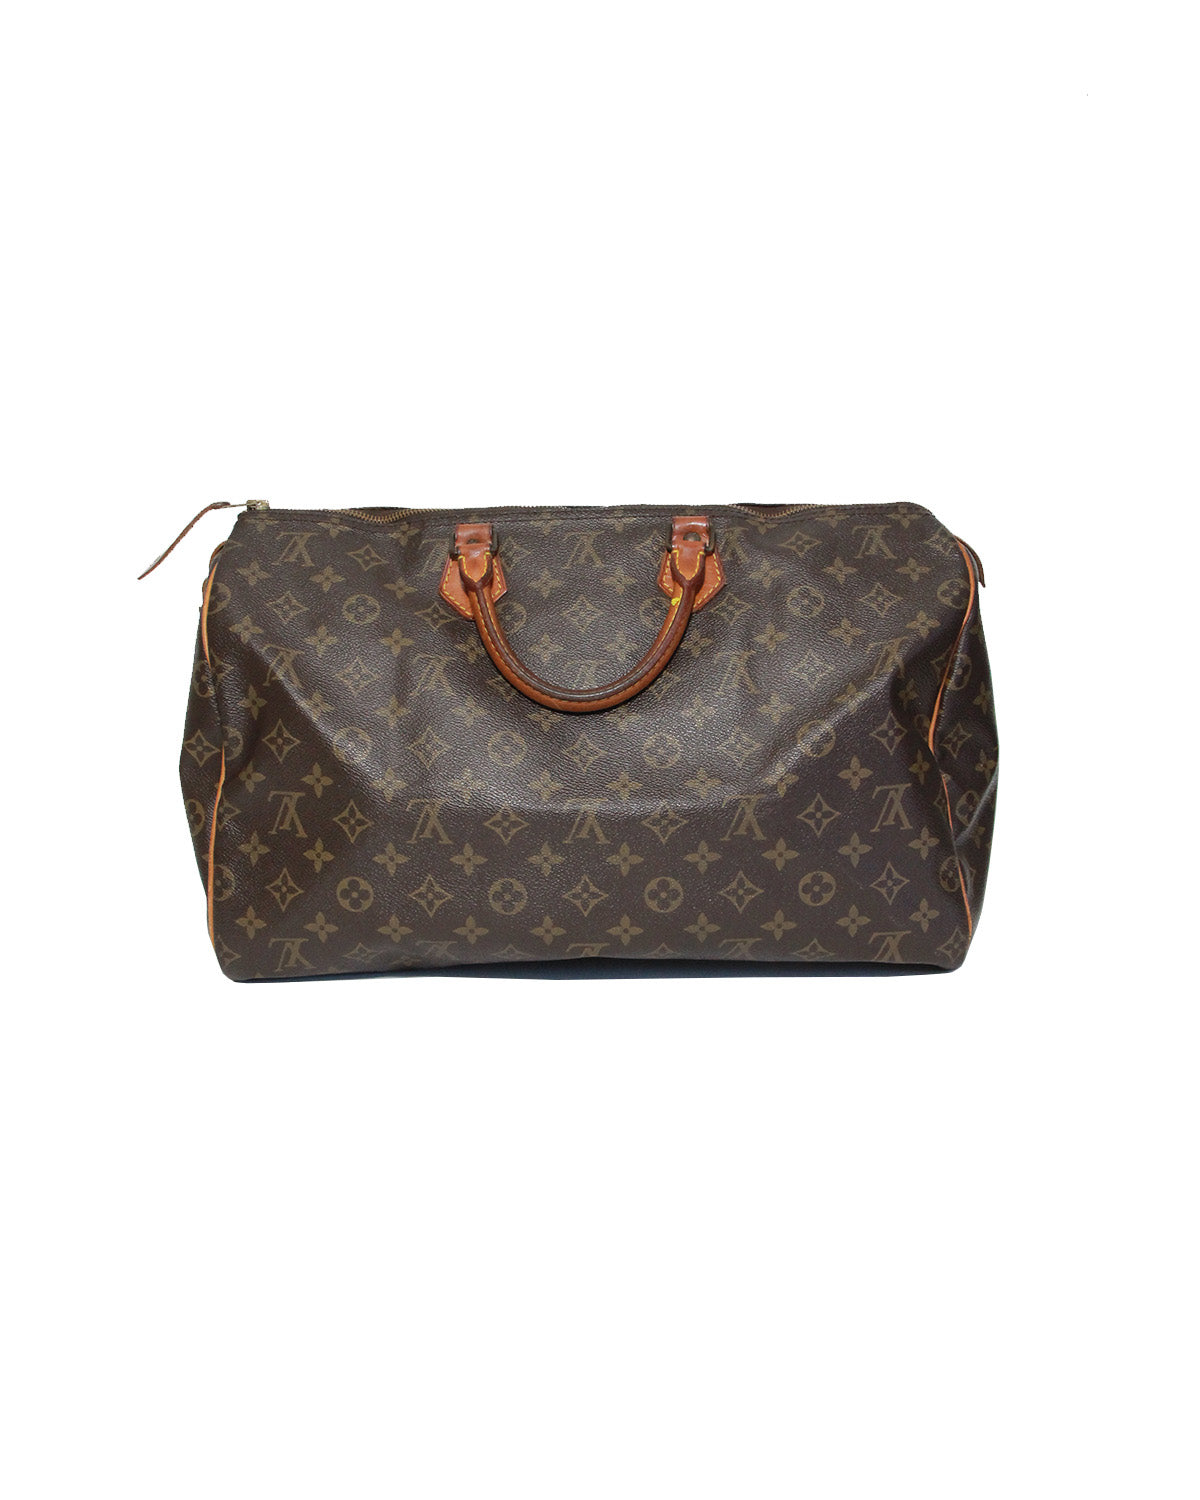 Louis Vuitton Speedy 40 Monogram Handbag.